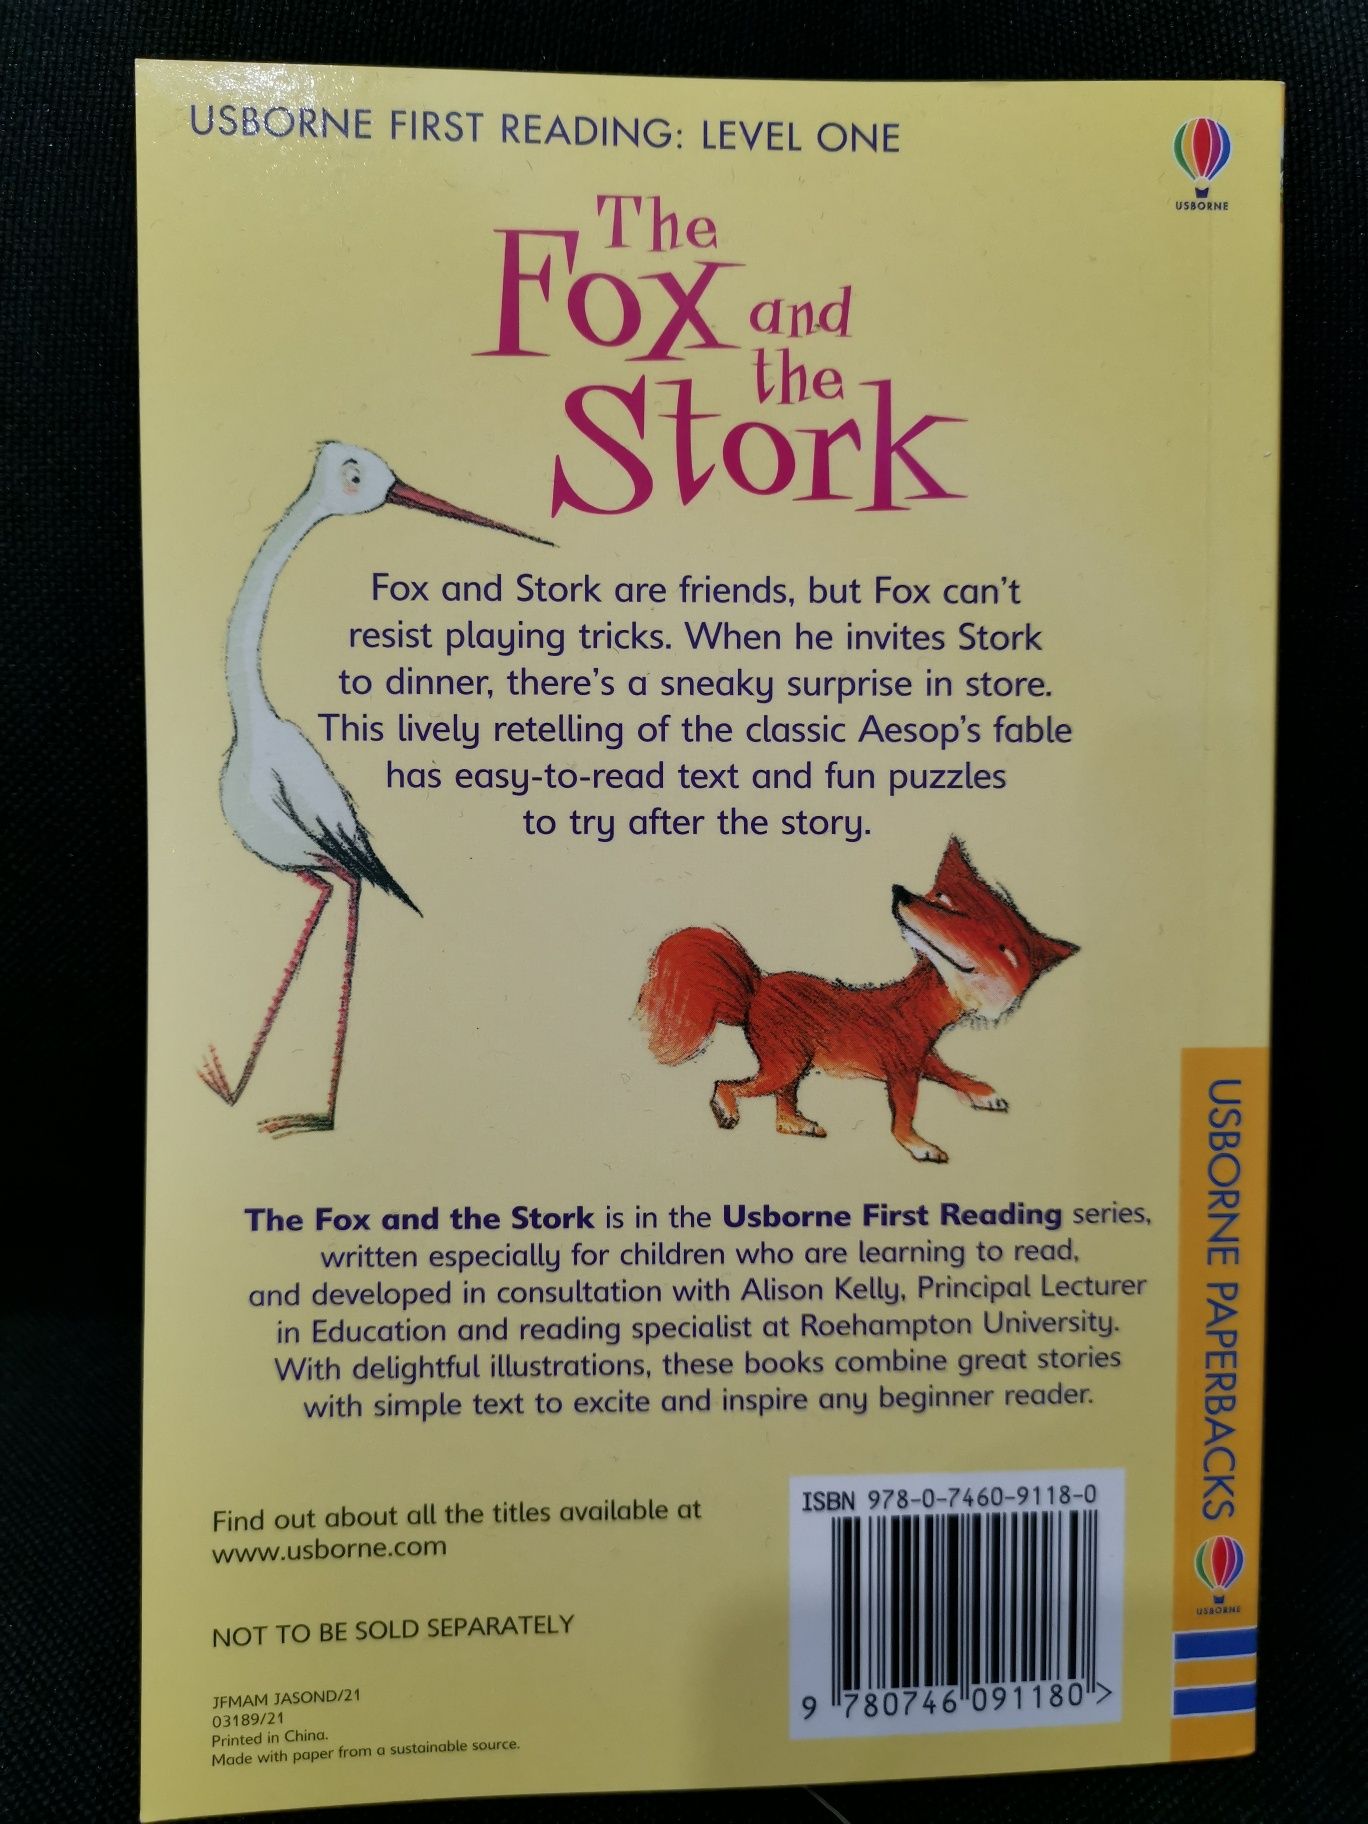 The Fox and the Stork, poziom 1, Mairi Mackinnon
The Fox and the Stork